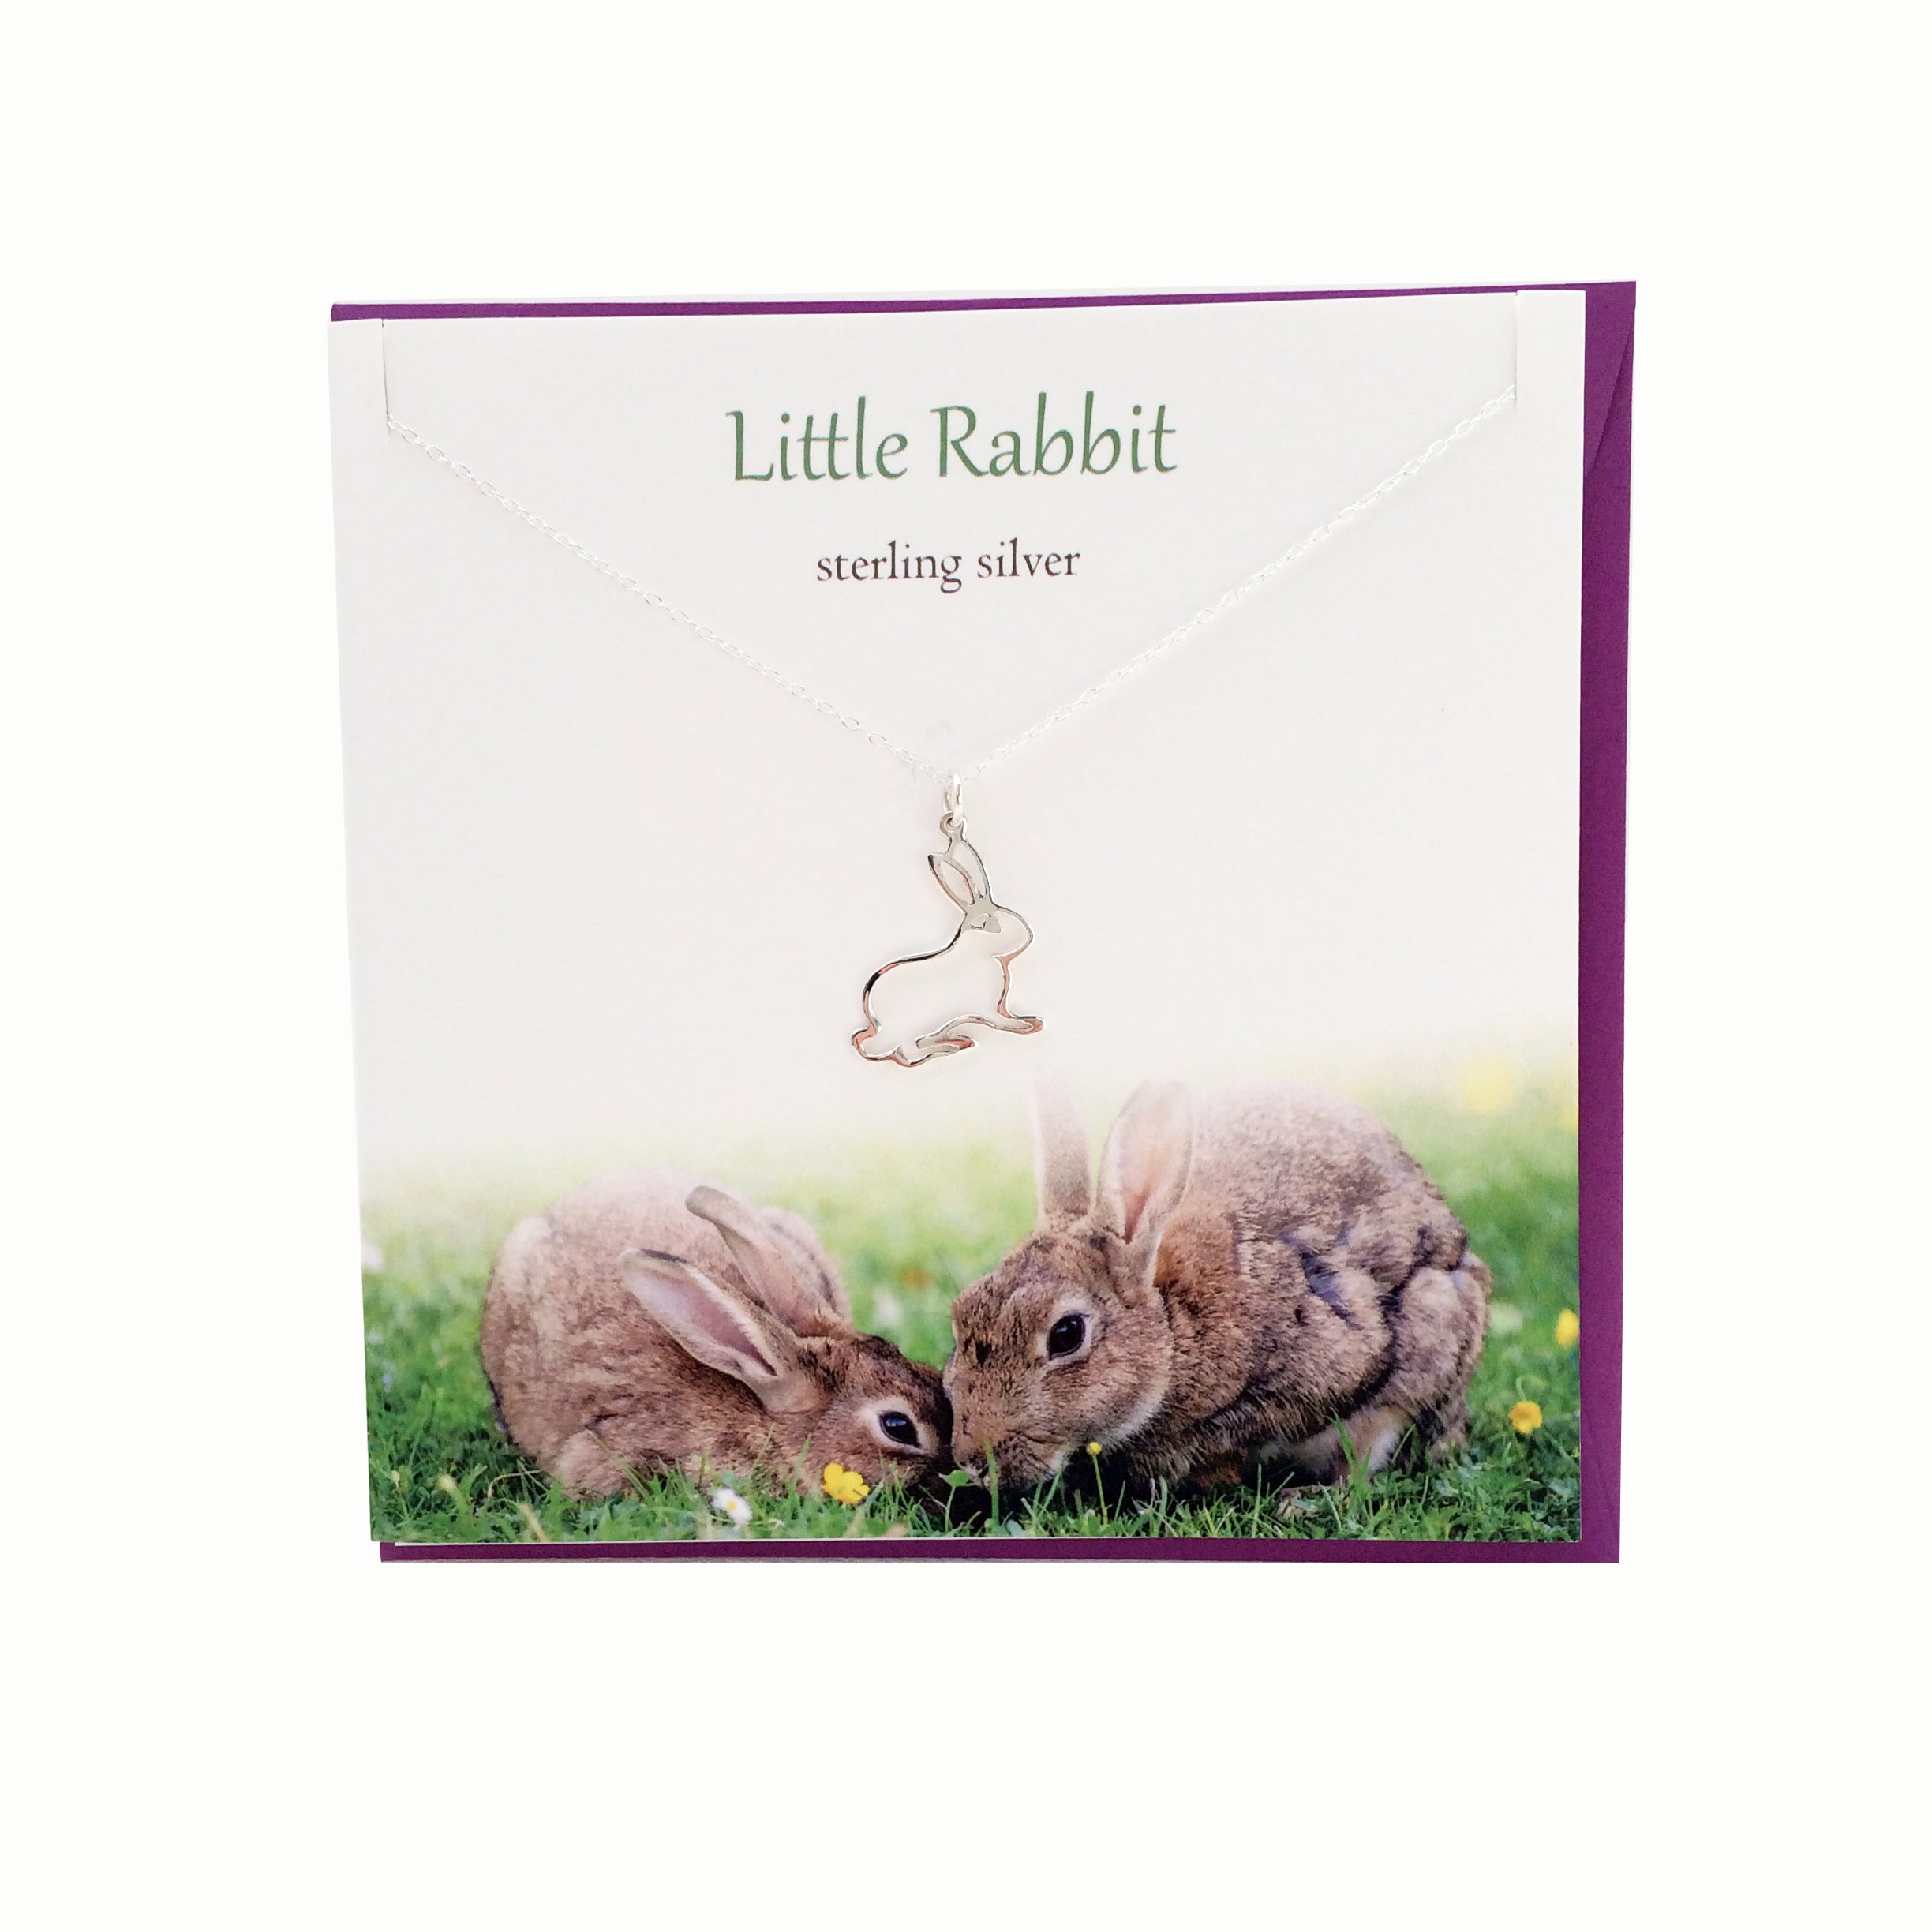 Little Rabbit silver necklace | The Silver Studio Scotland